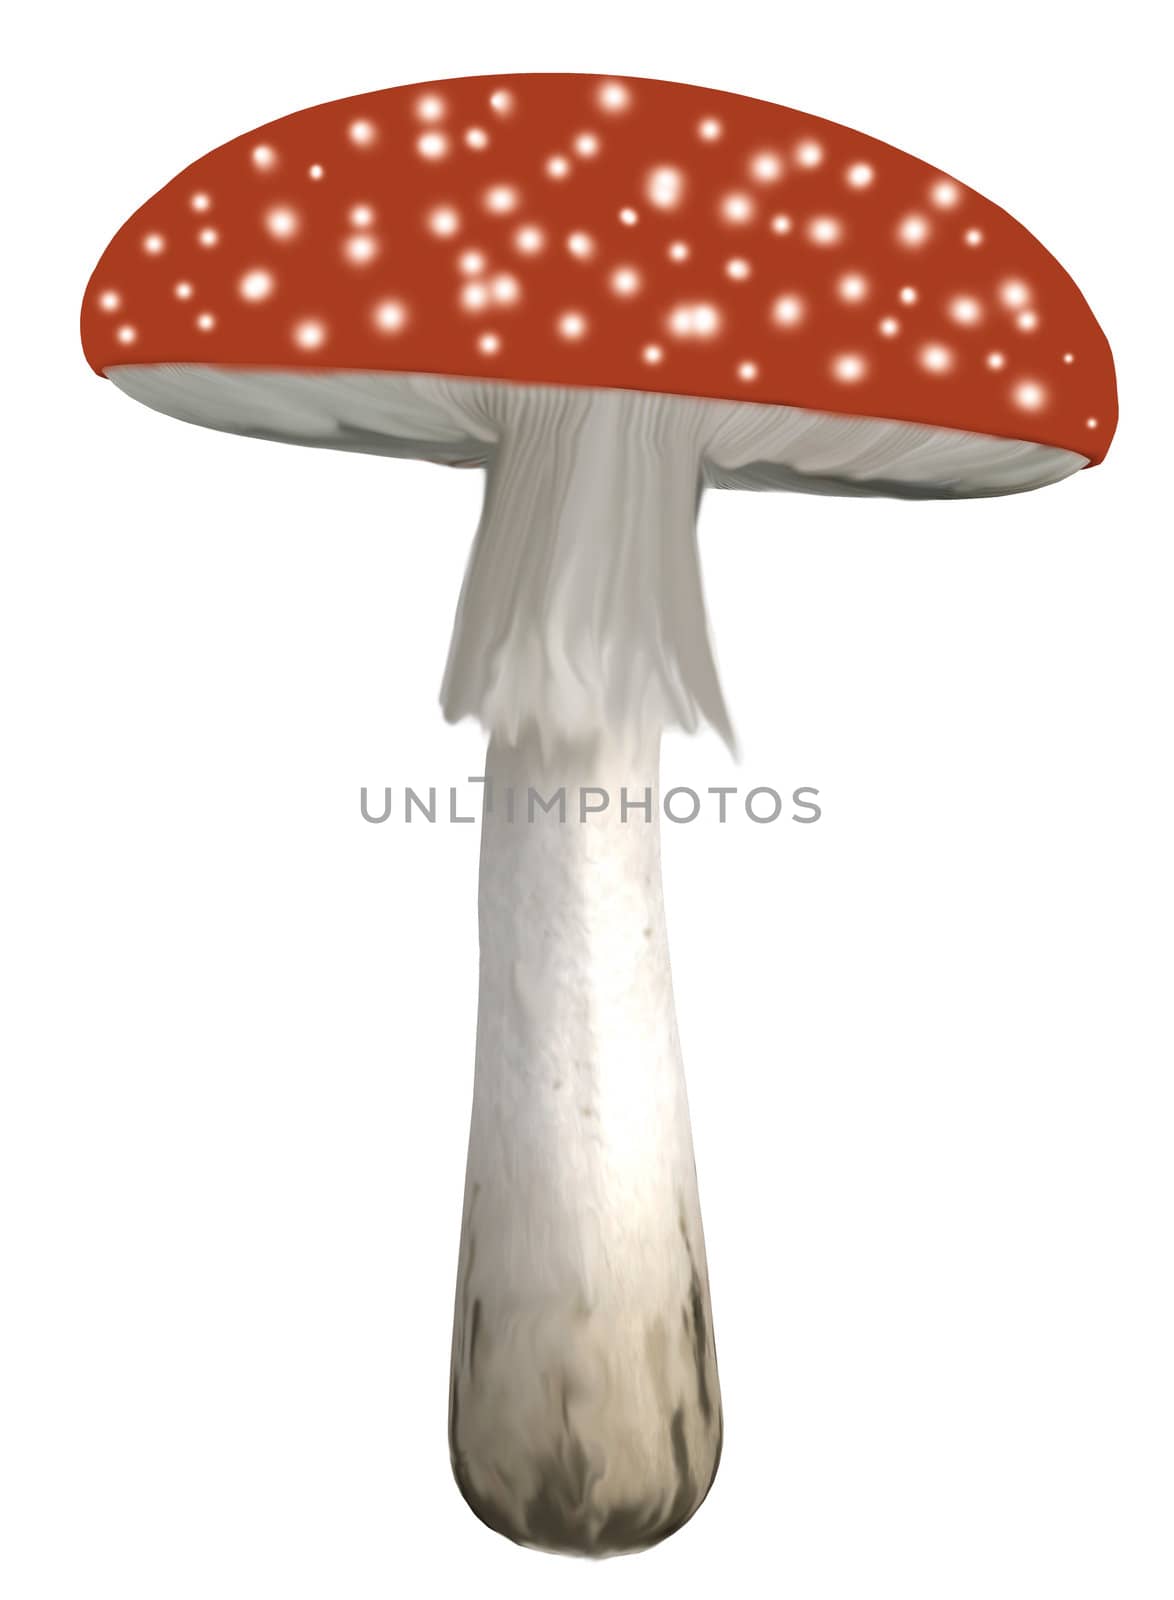 Polka Dotted Mushroom by kathygold